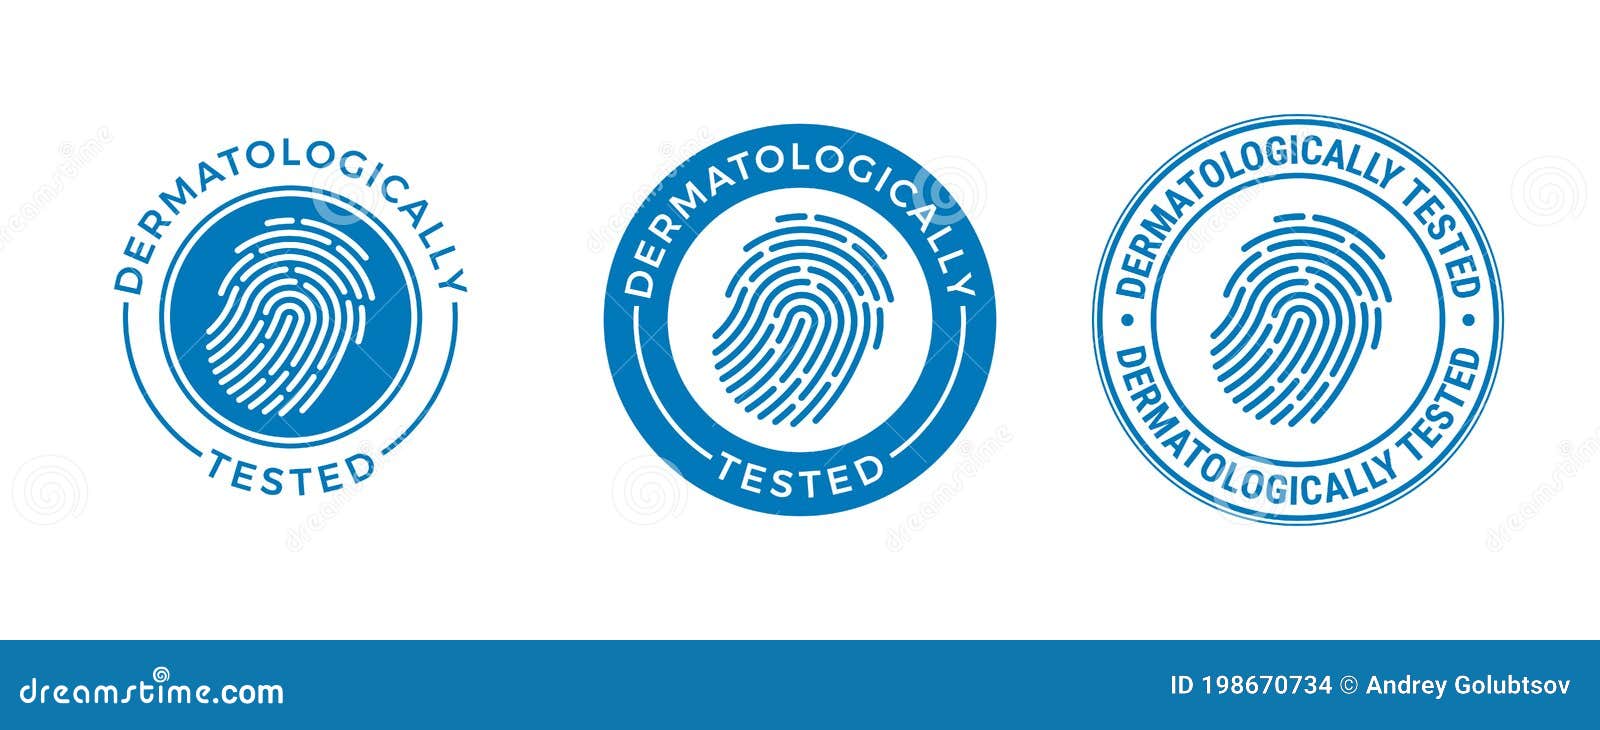 dermatologically tested  label, fingerprint logo. dermatology test and dermatologist clinically proven icon for allergy free